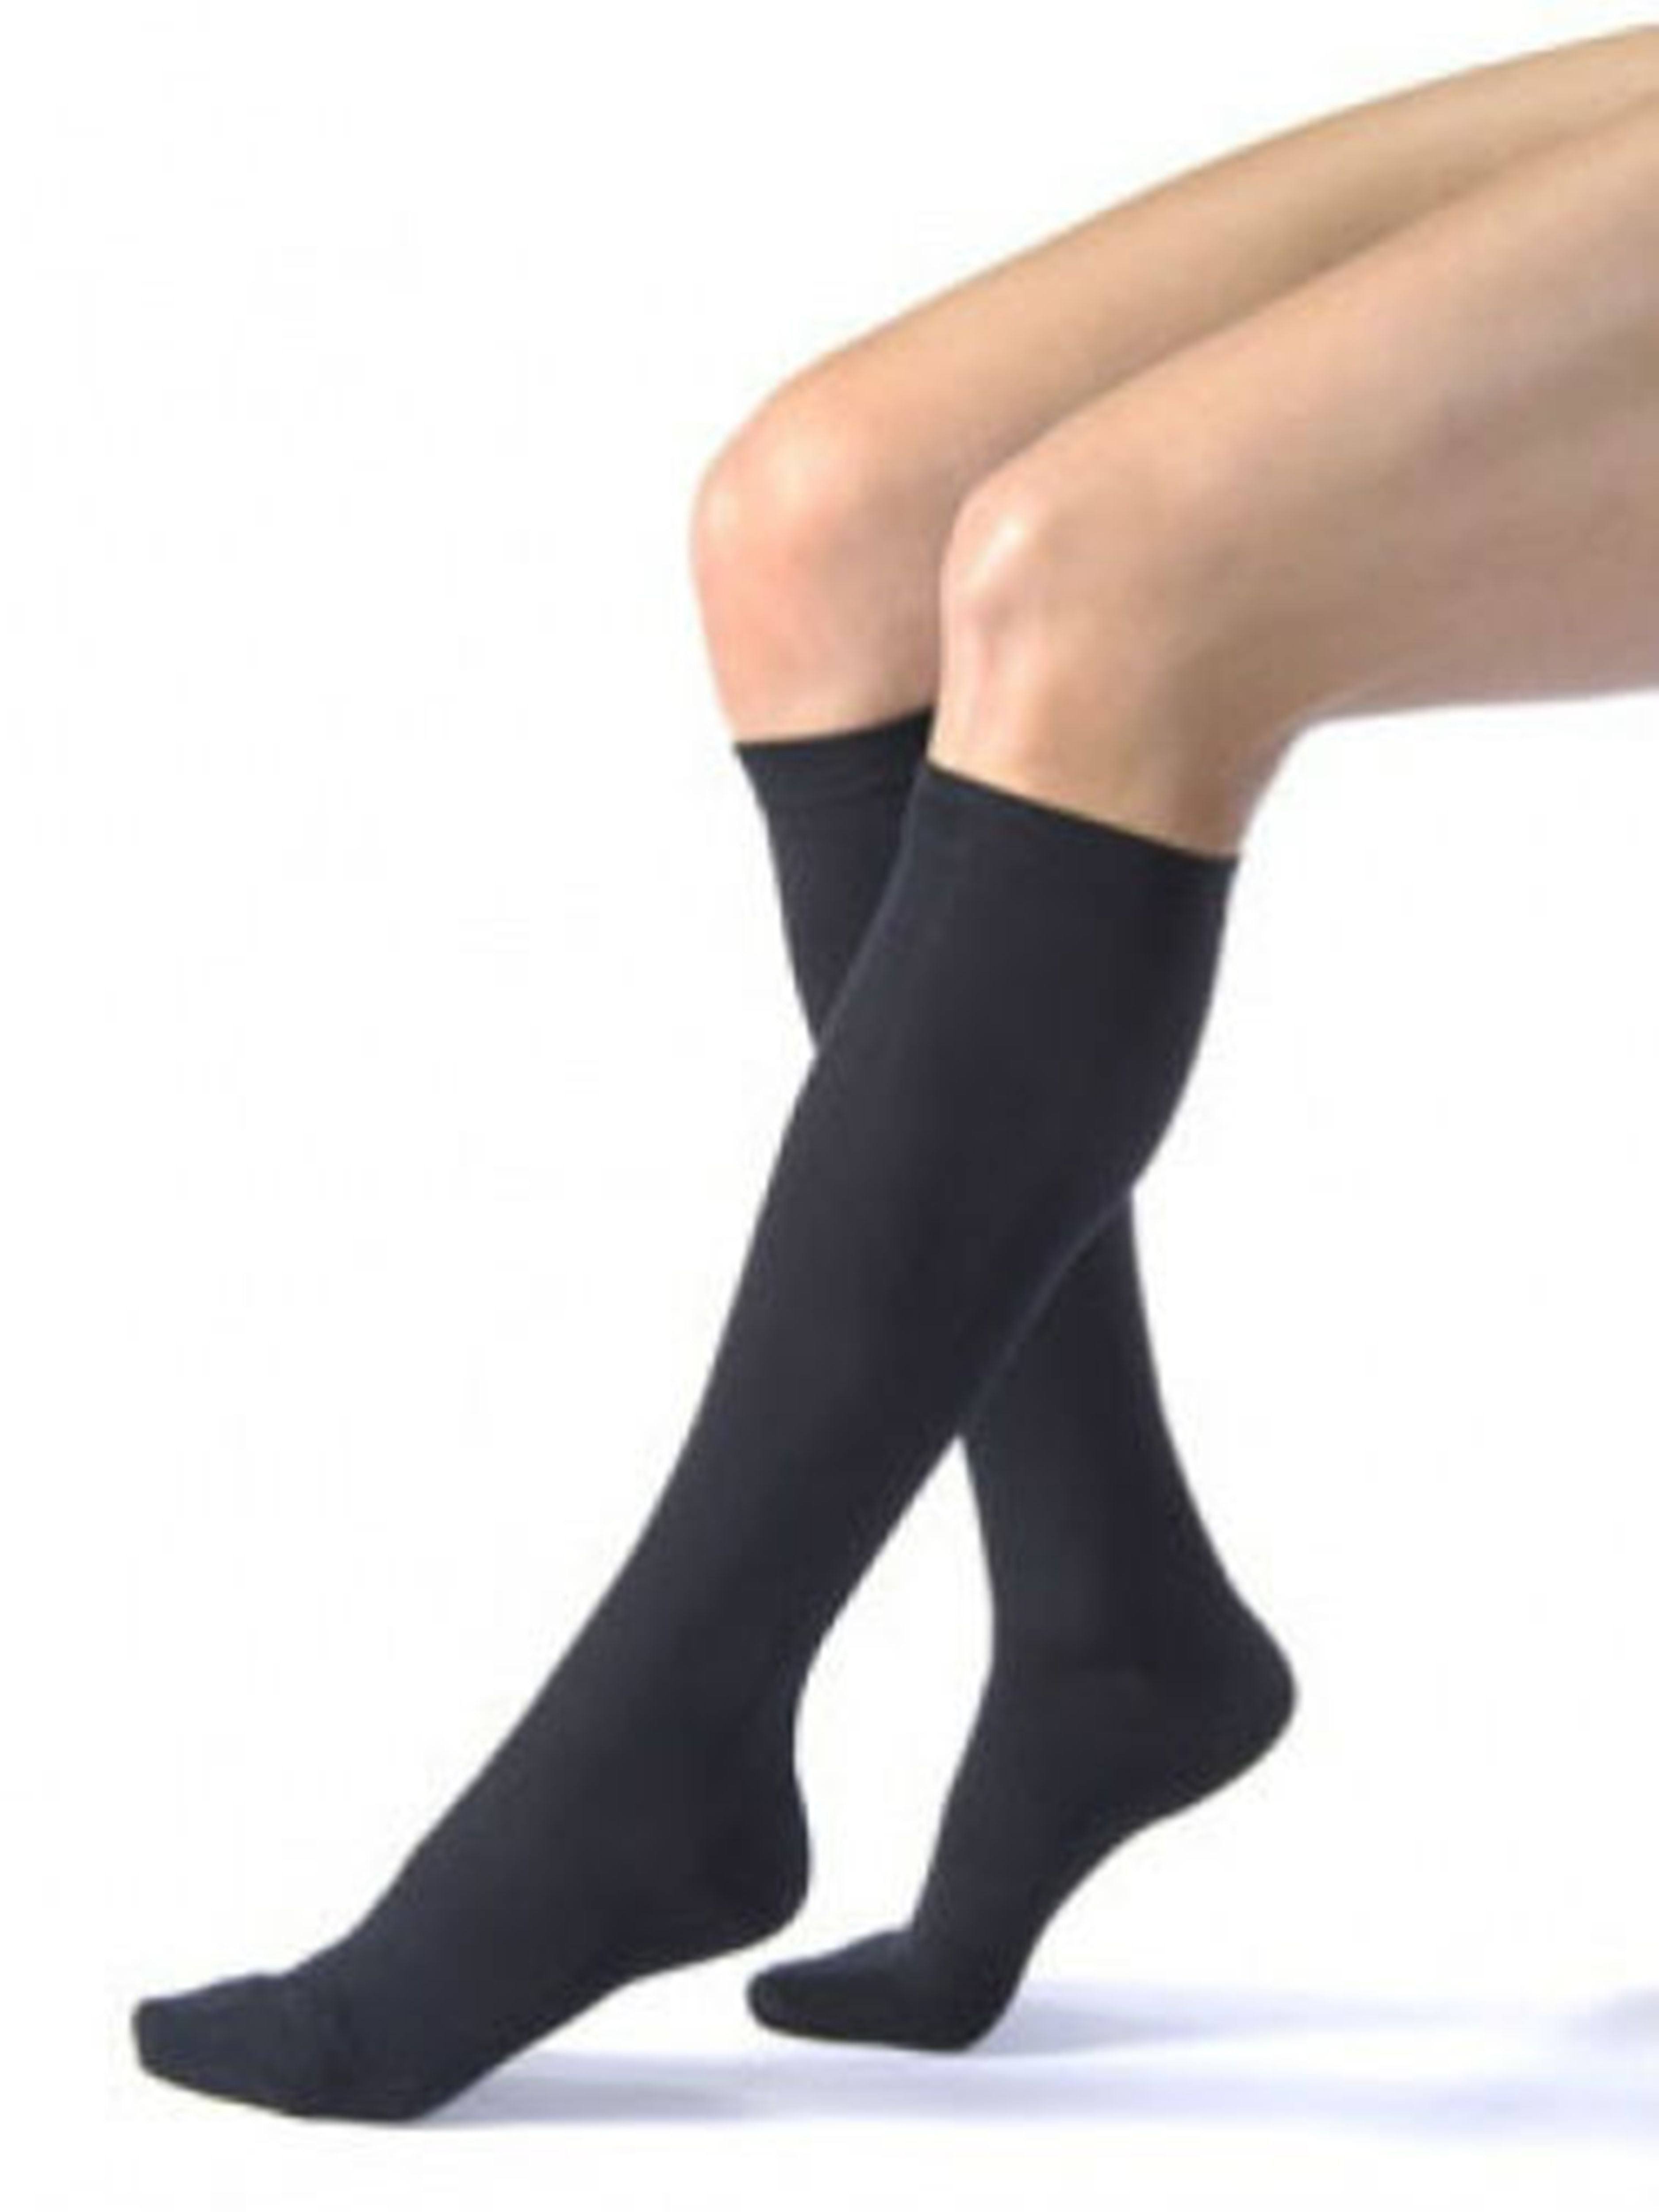 Activa Soft Fit Knee High Socks - Black, Medium, 20 to 30mmHg